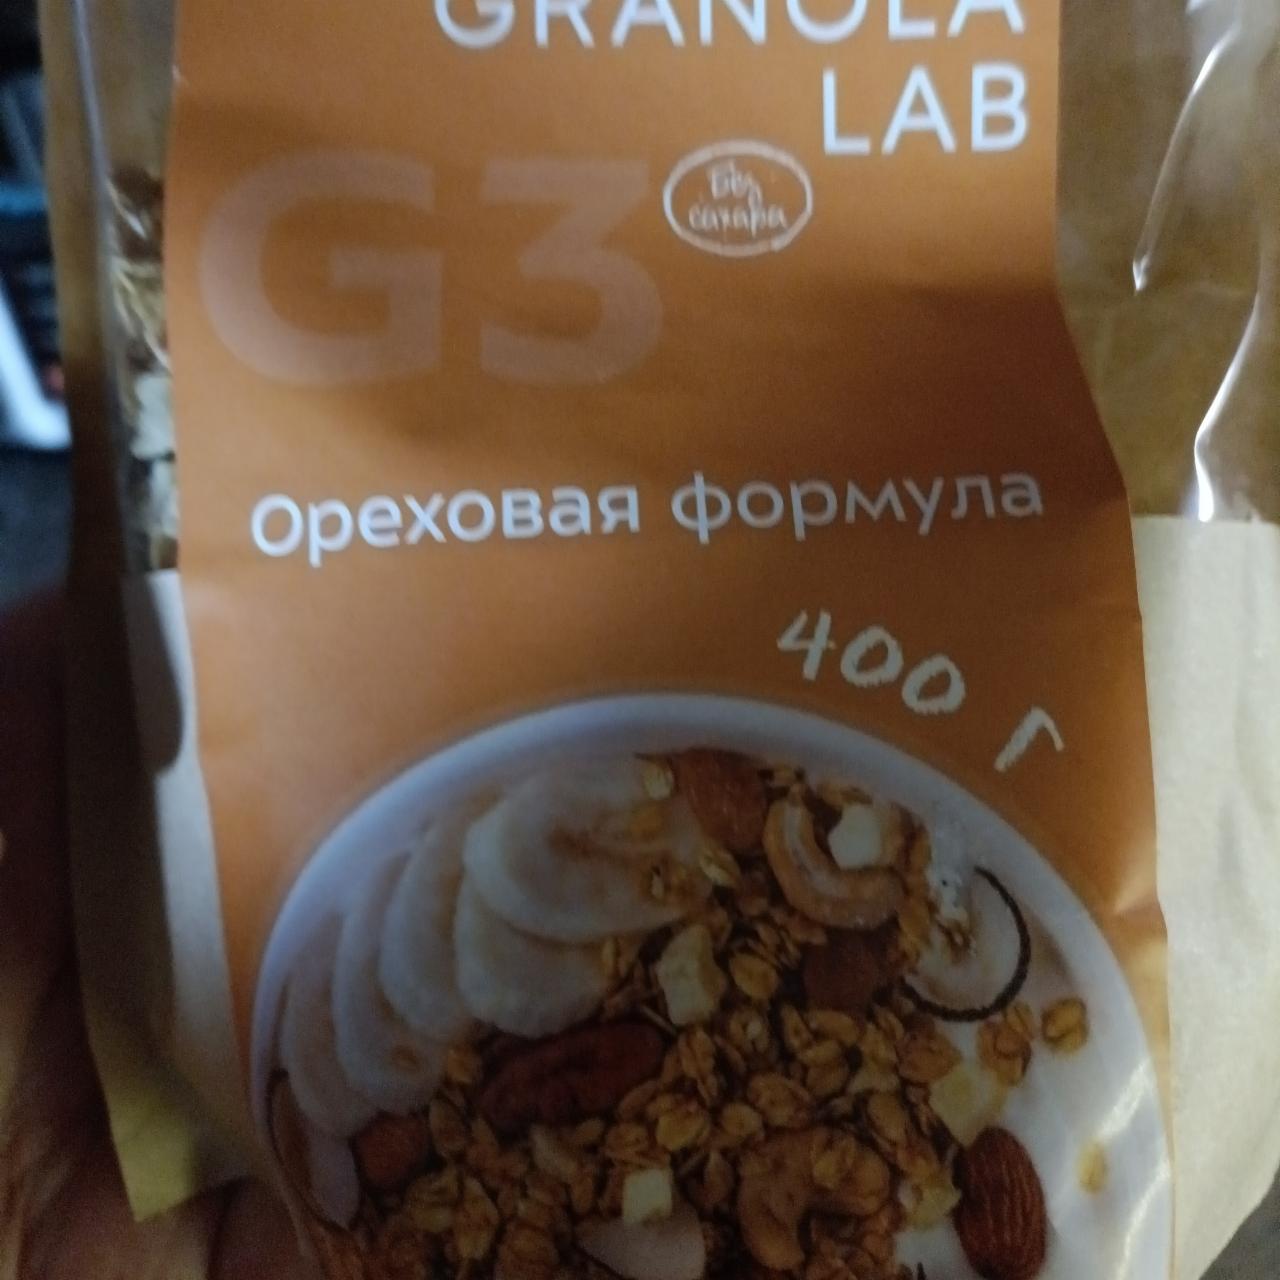 Фото - Гранола ореховая формула Granola lab